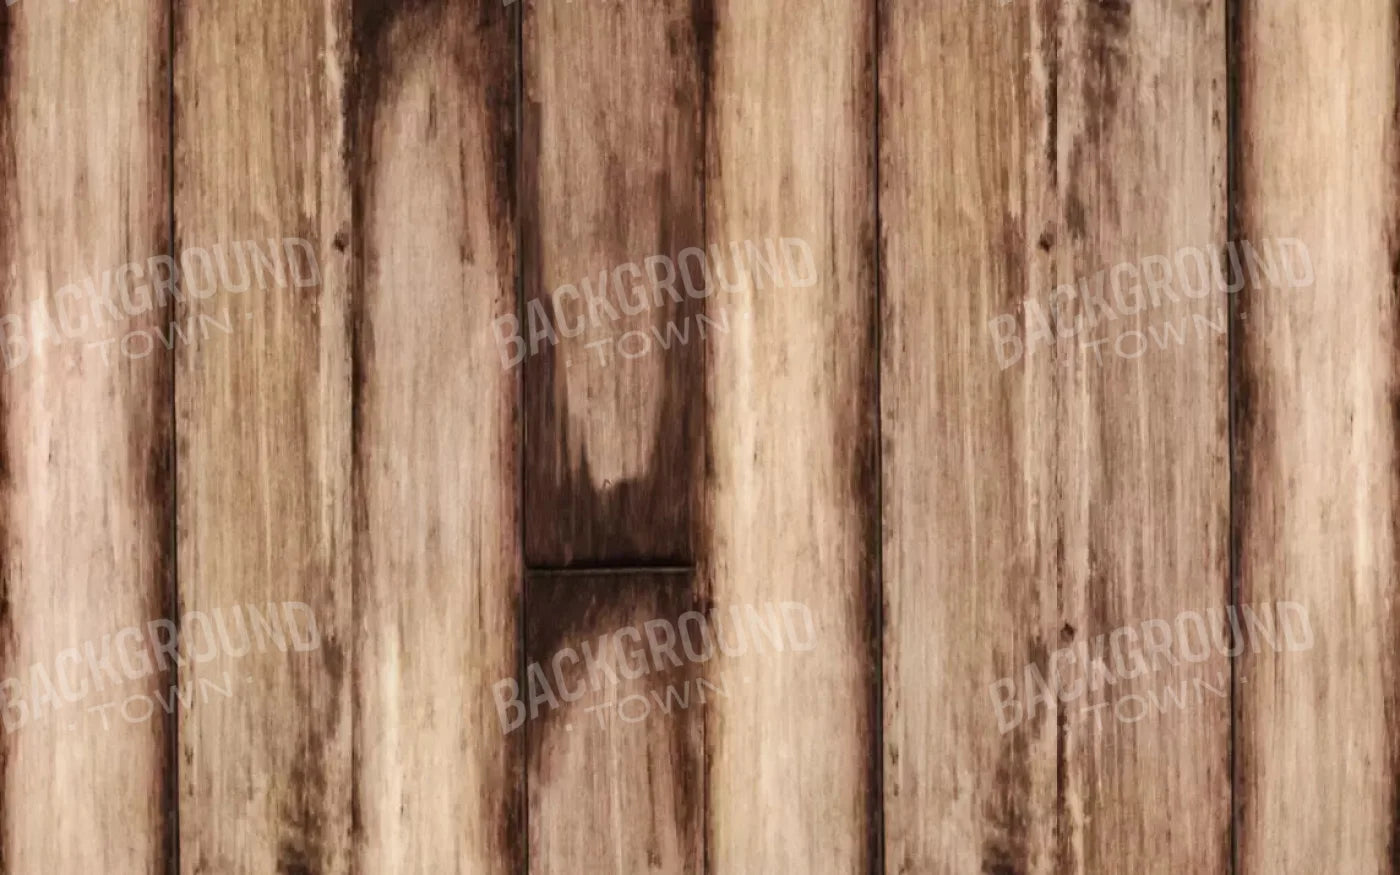 Chestnut 14X9 Ultracloth ( 168 X 108 Inch ) Backdrop